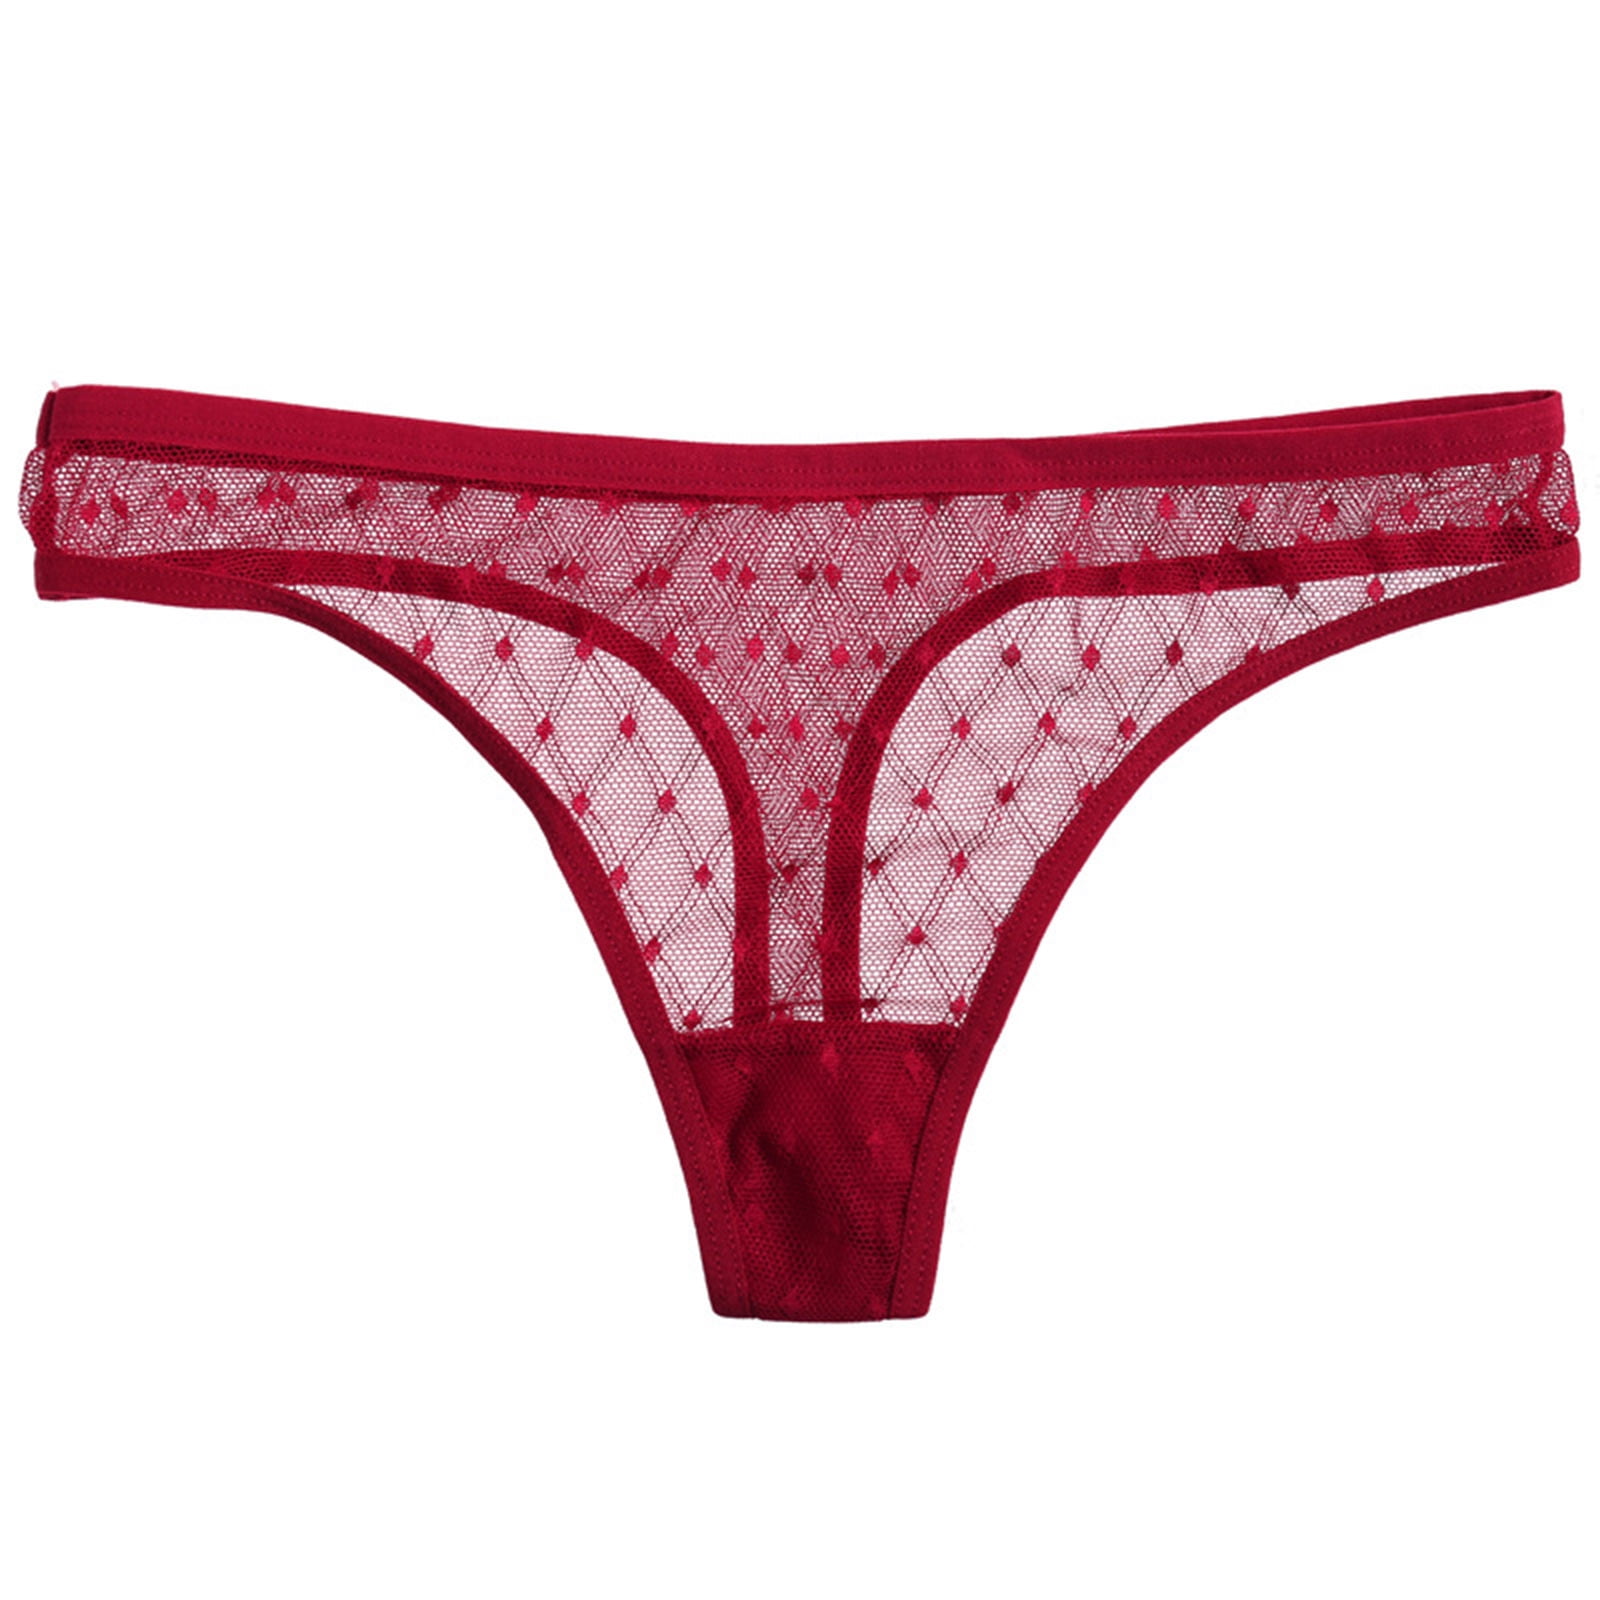 Panty for Women Contrast Lace Rib Thong Plain Slight Stretch Net Mesh  Panties Underwear & Sleepwear Intimates Lingerie Panties 